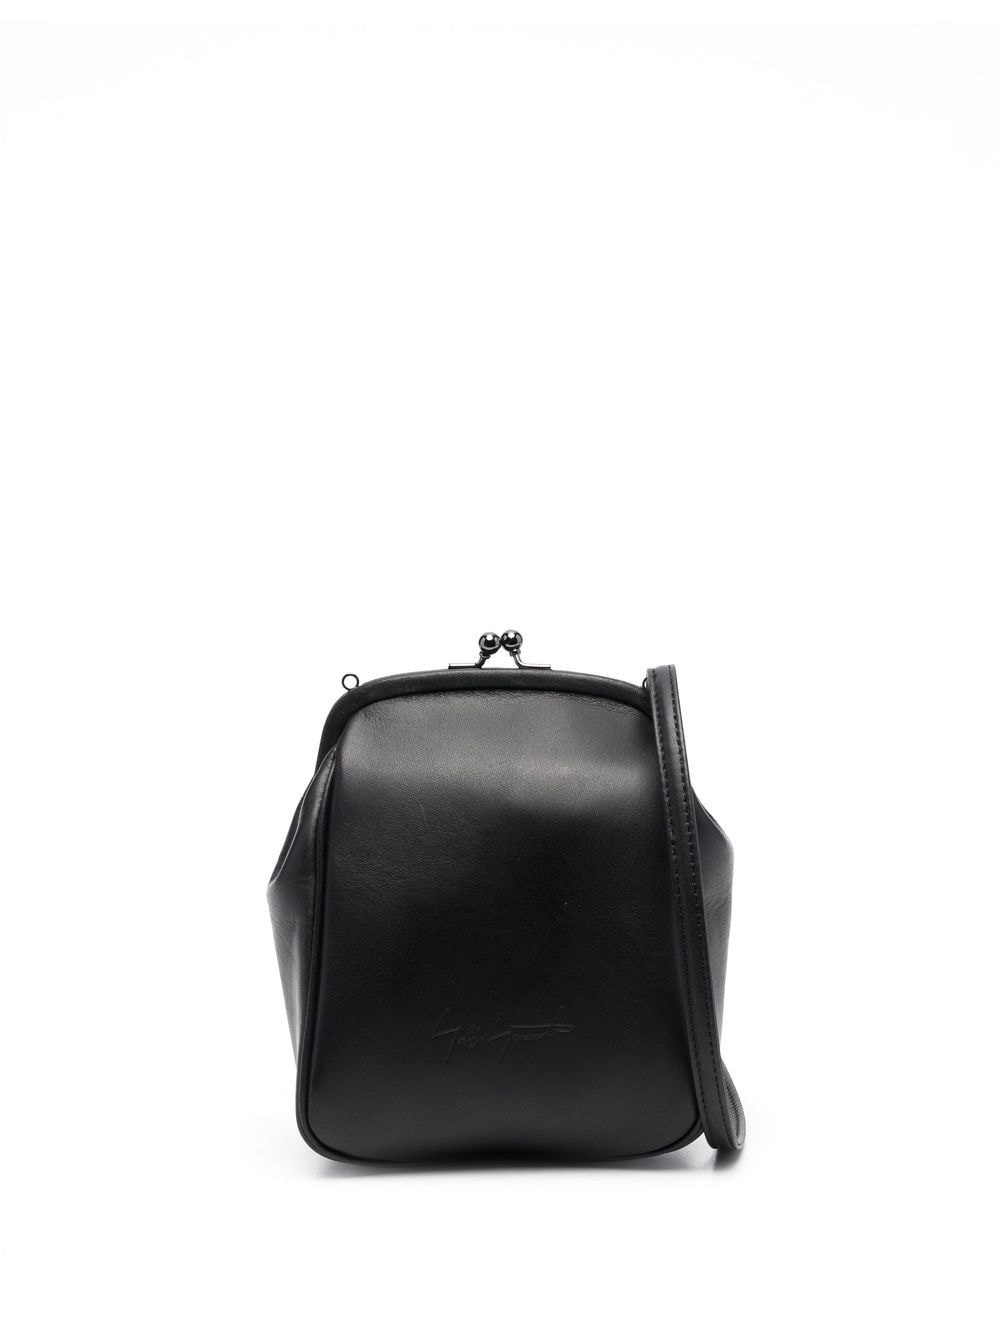 Tasche leather crossbody bag - 1